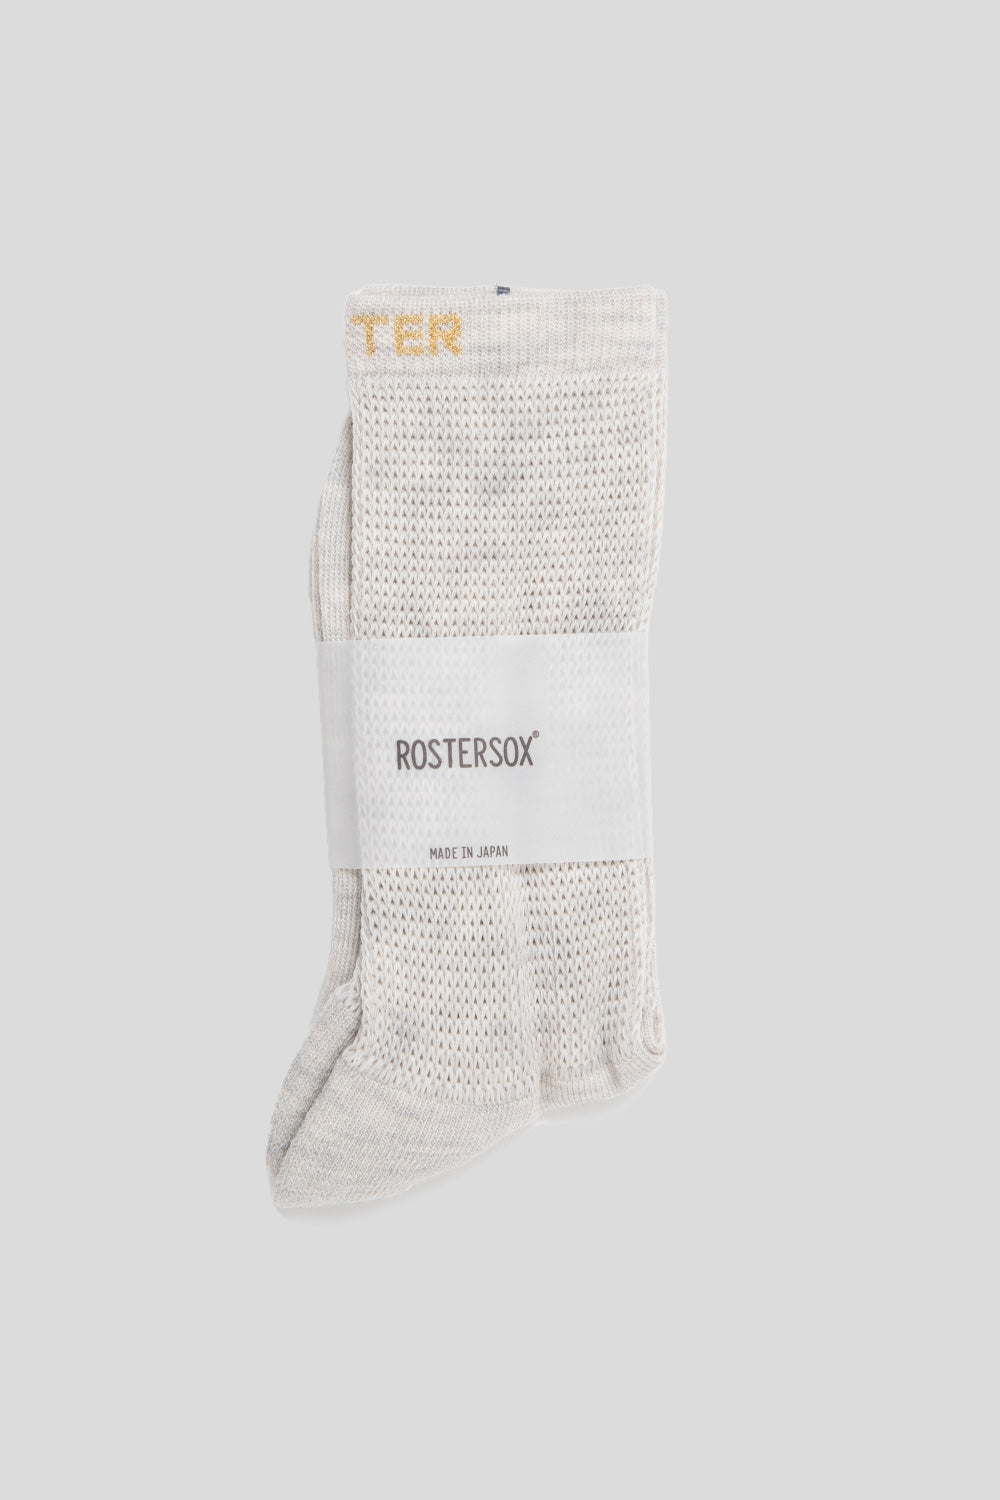 Rostersox Merino Wool Pile Socks in White